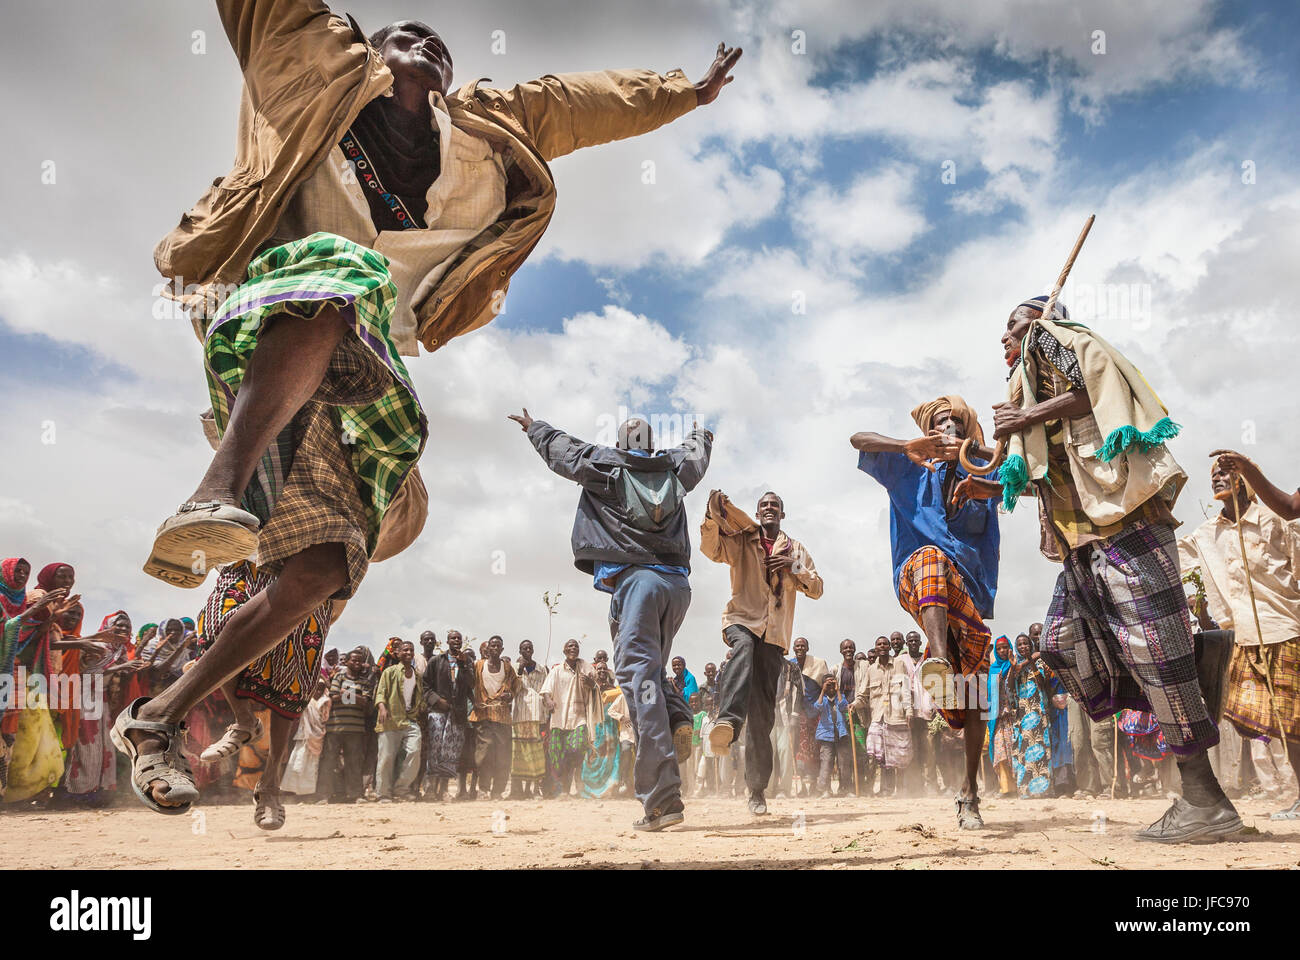 Celebration in Somali Region, Ethiopia. Stock Photo